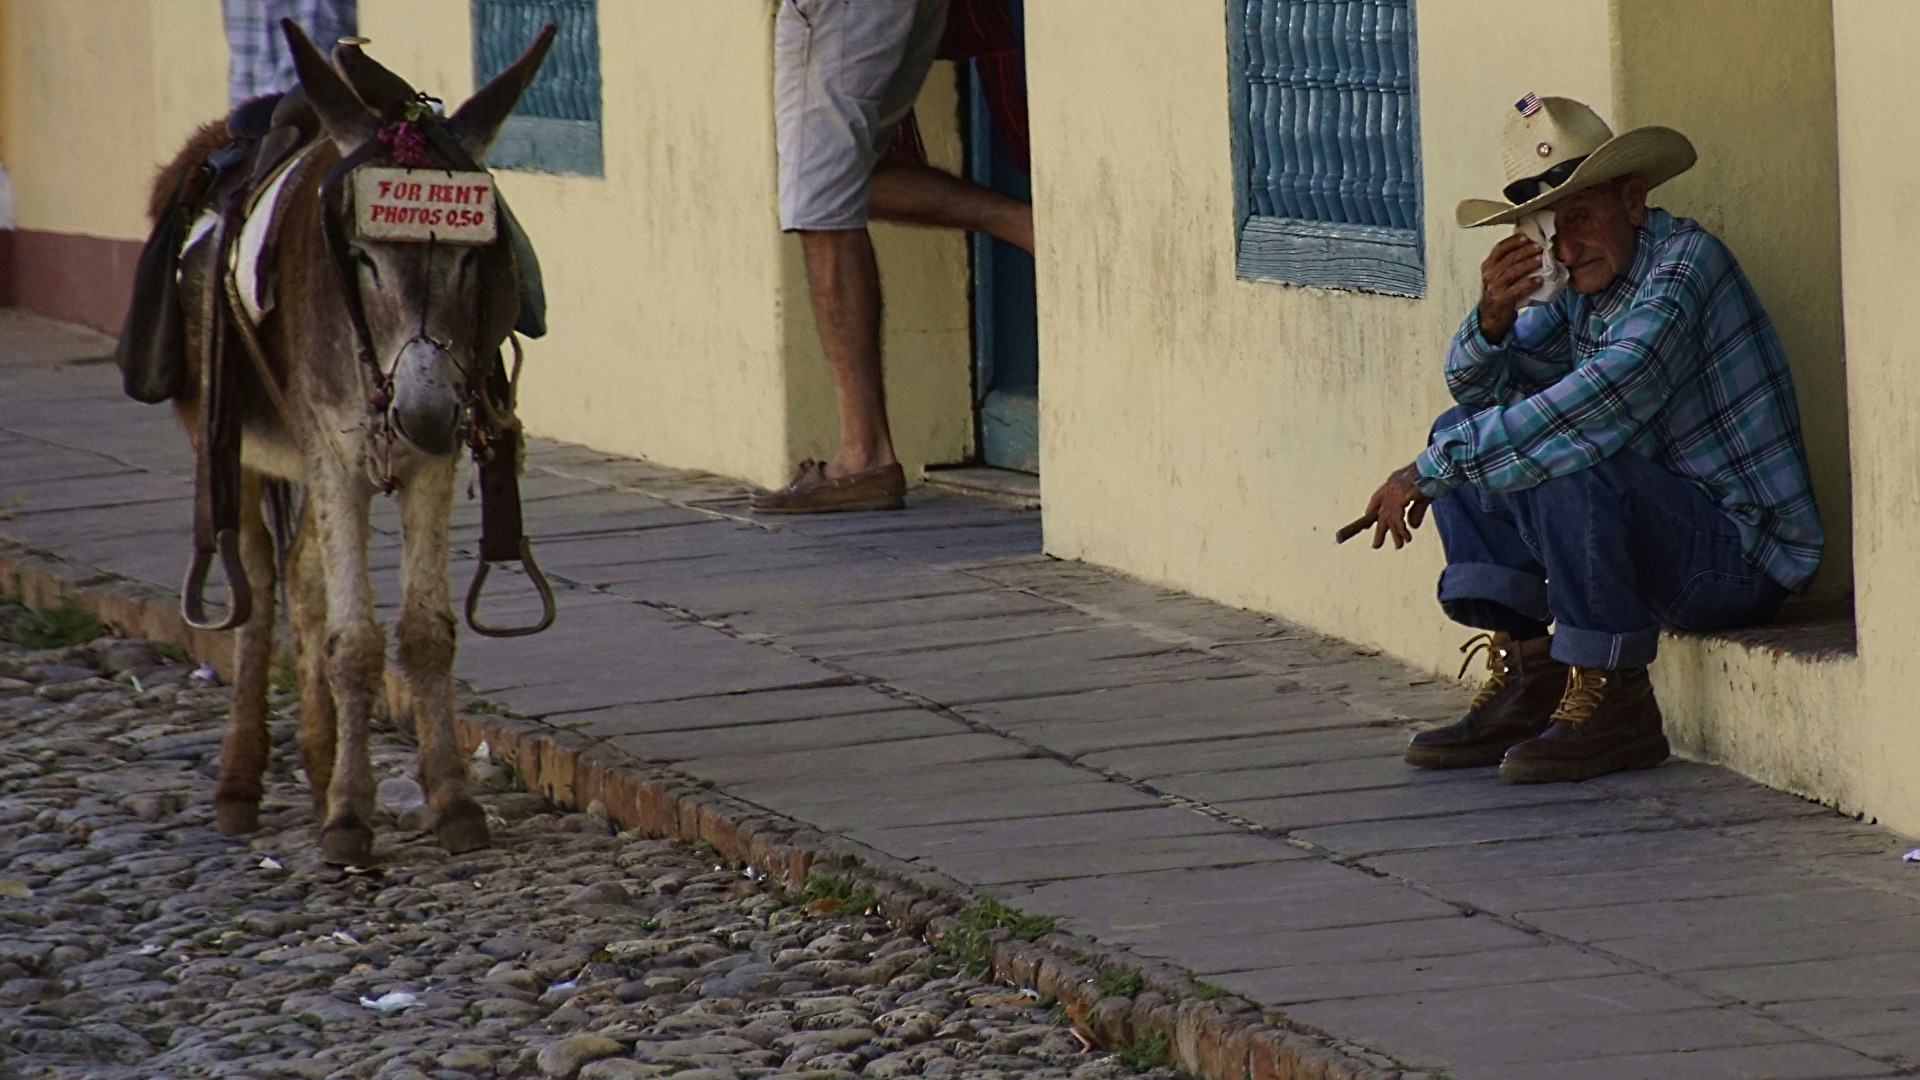 #Streetfotografie - Rent a Donkey in Trinidad